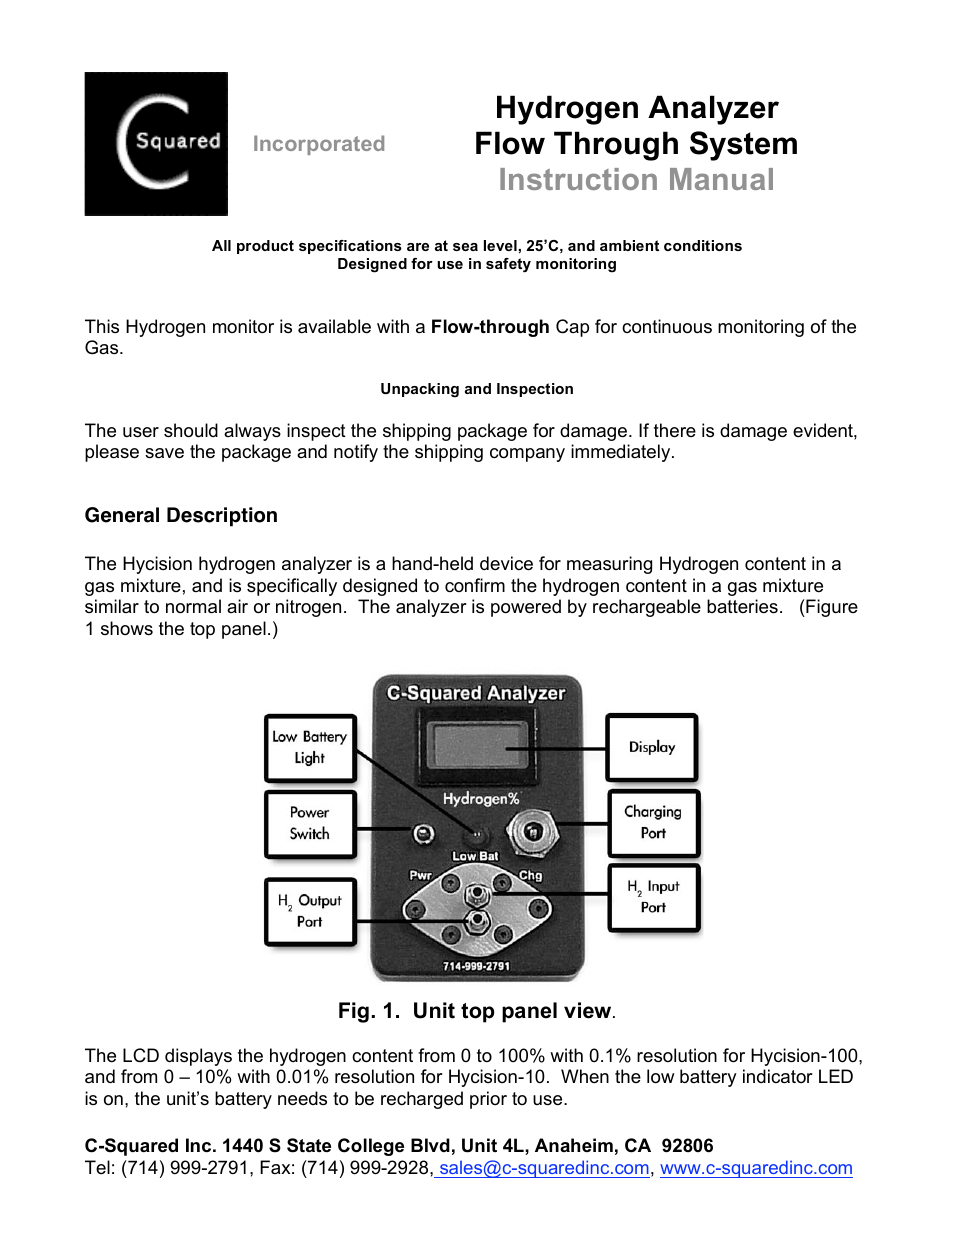 Hydrogen Flow Through Analyzer Manual